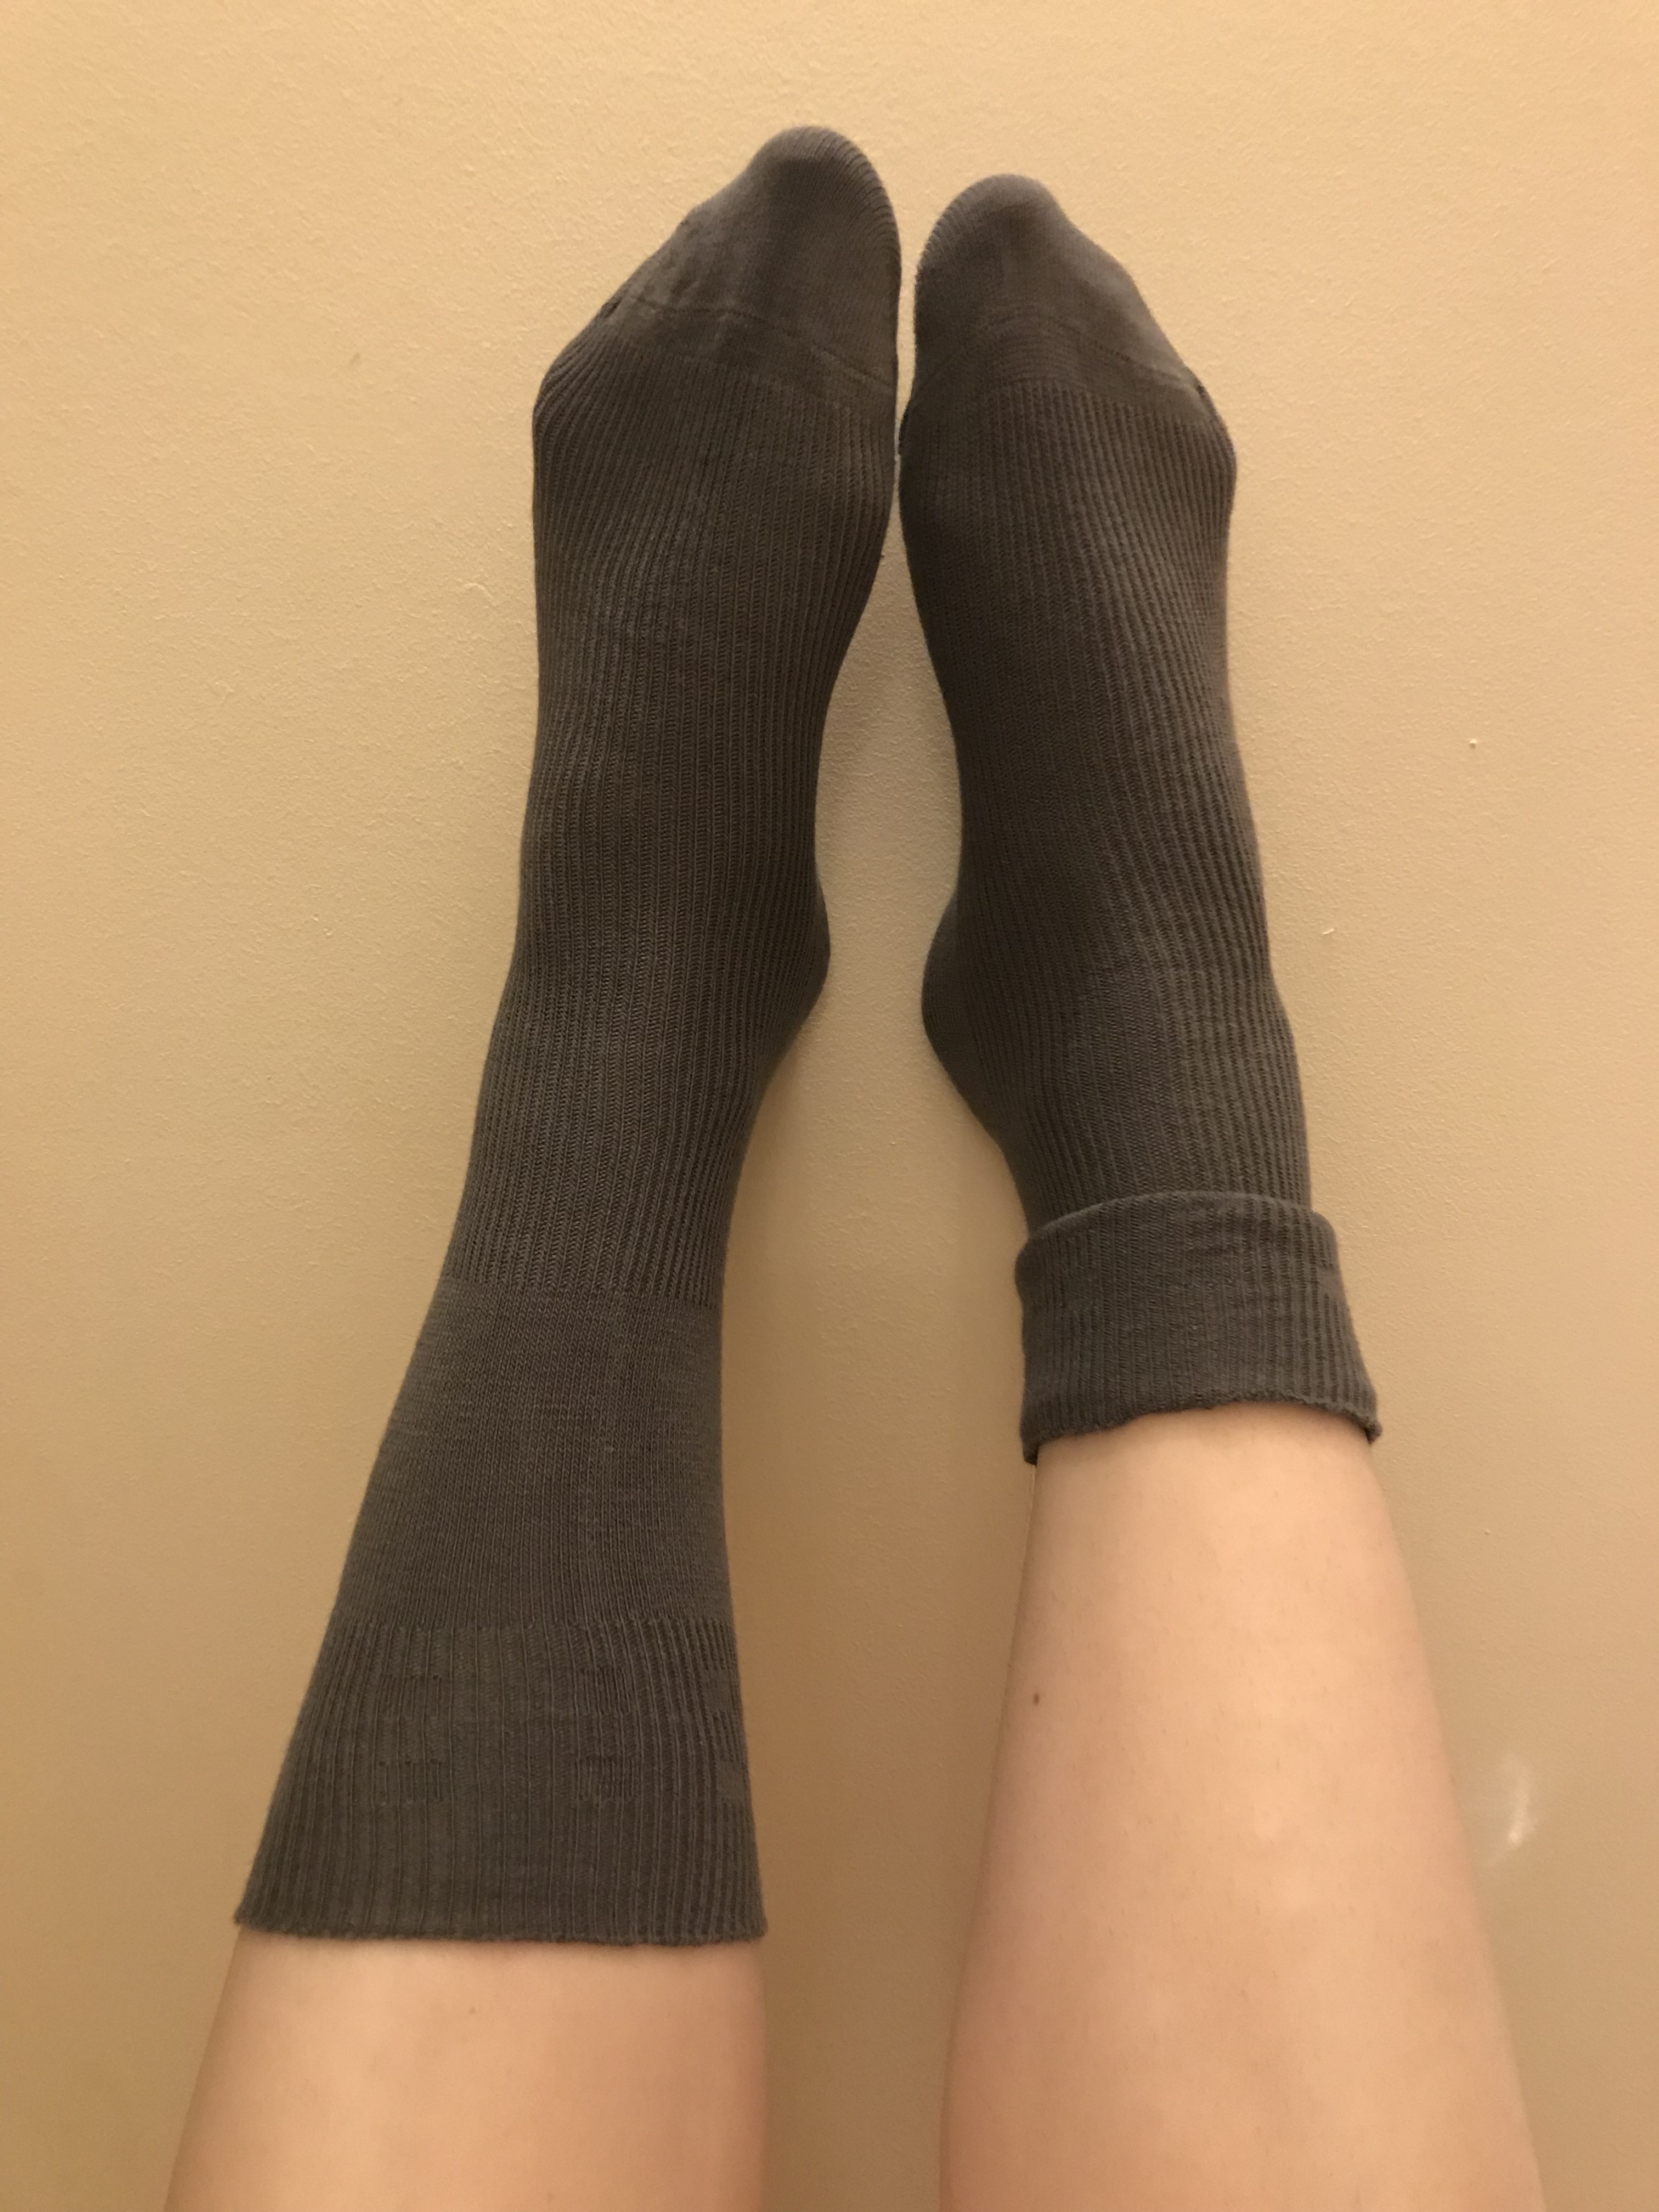 socks that aren't tight 2